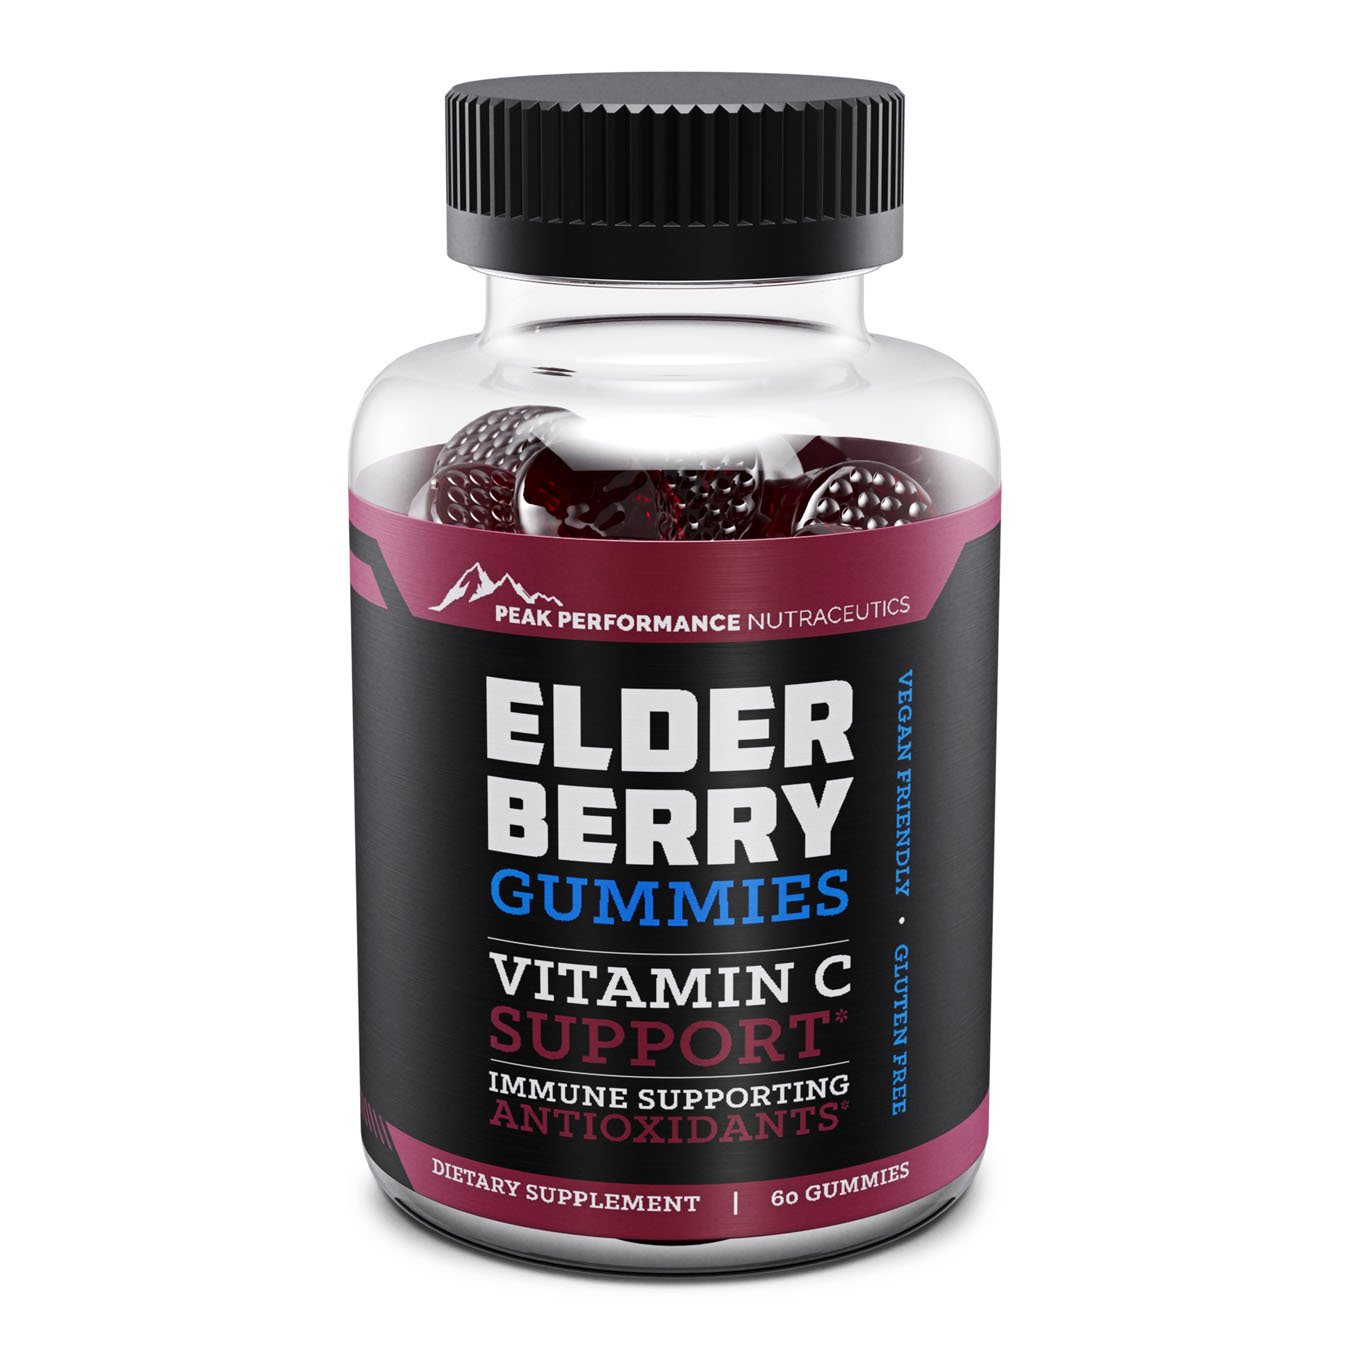 Elderberry Gummies - Peak Performance Nutraceutics